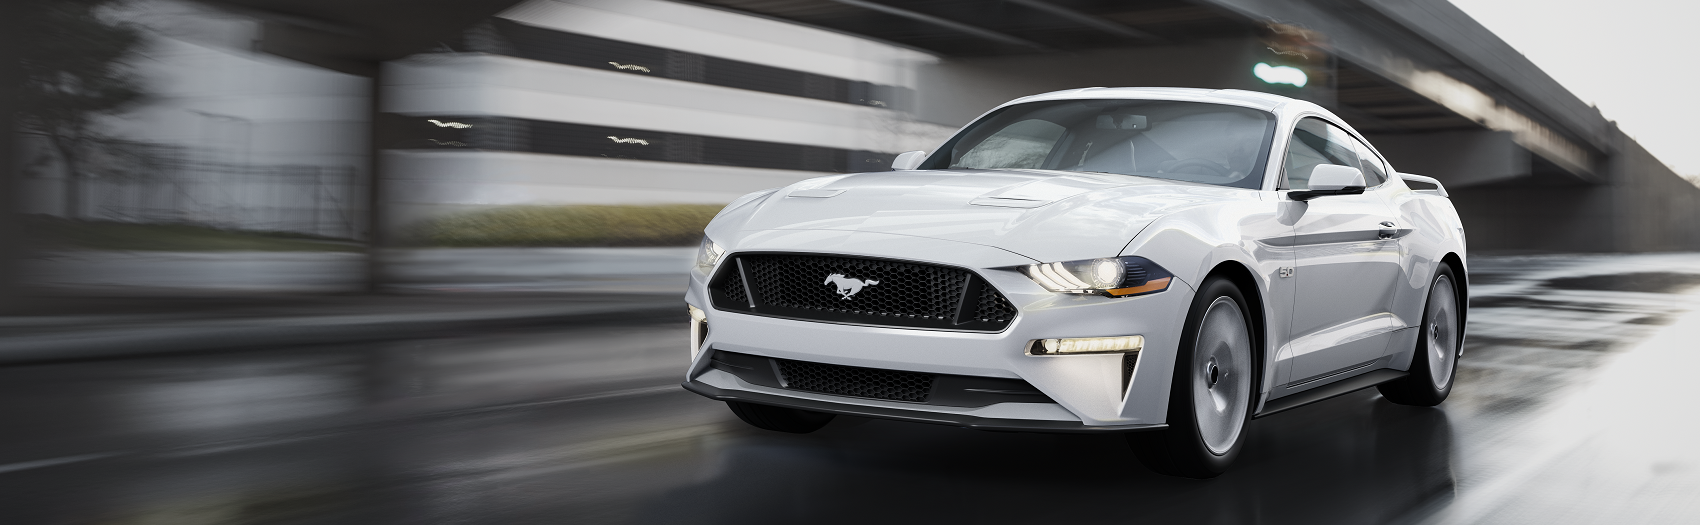 Ford Mustang Reviews Detroit MI” 